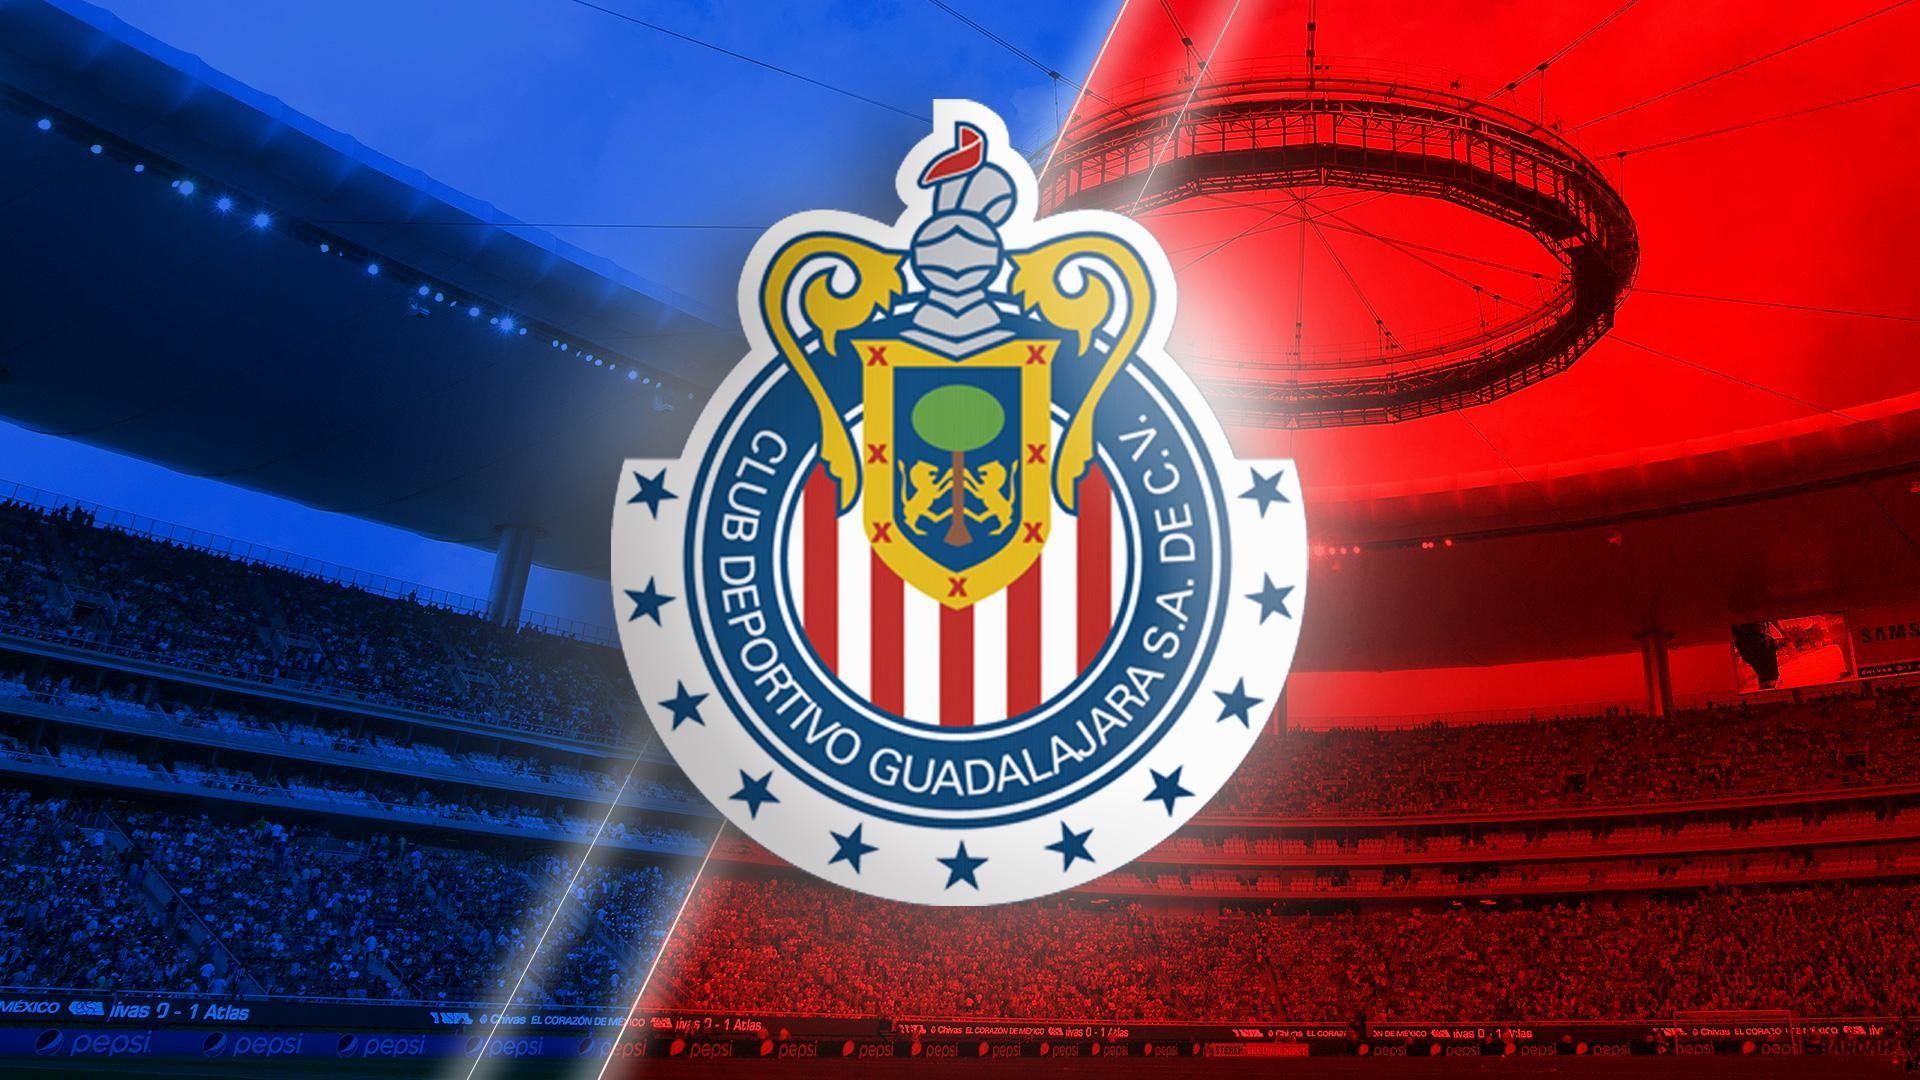 Wallpaper wallpaper sport logo football Guadalajara Chivas images for  desktop section спорт  download